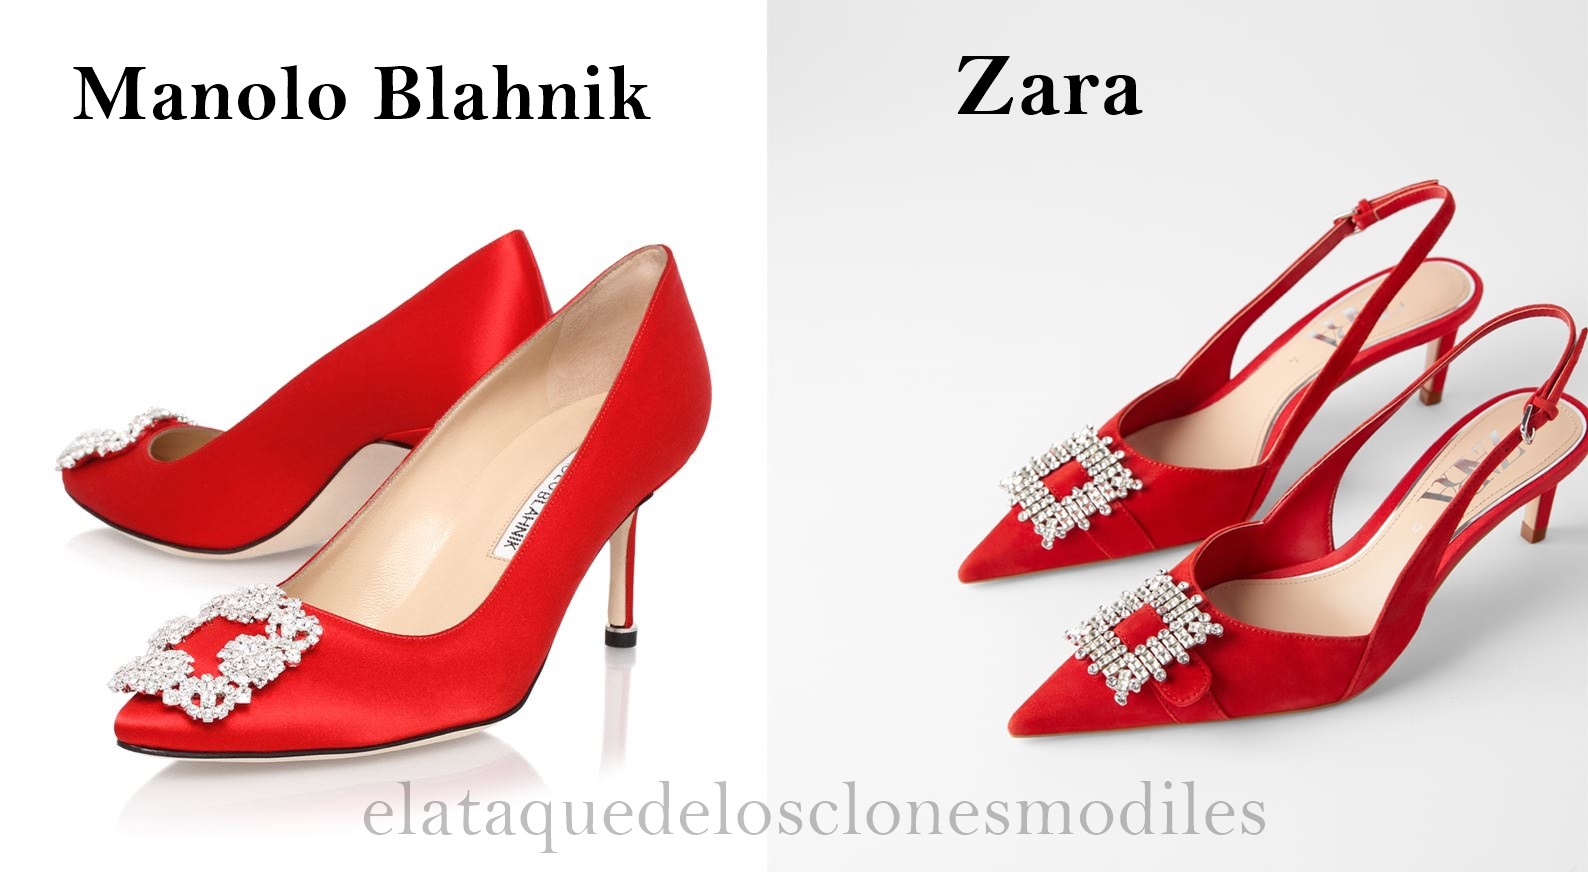 Clon zapatos rojos Blahnik, Zara